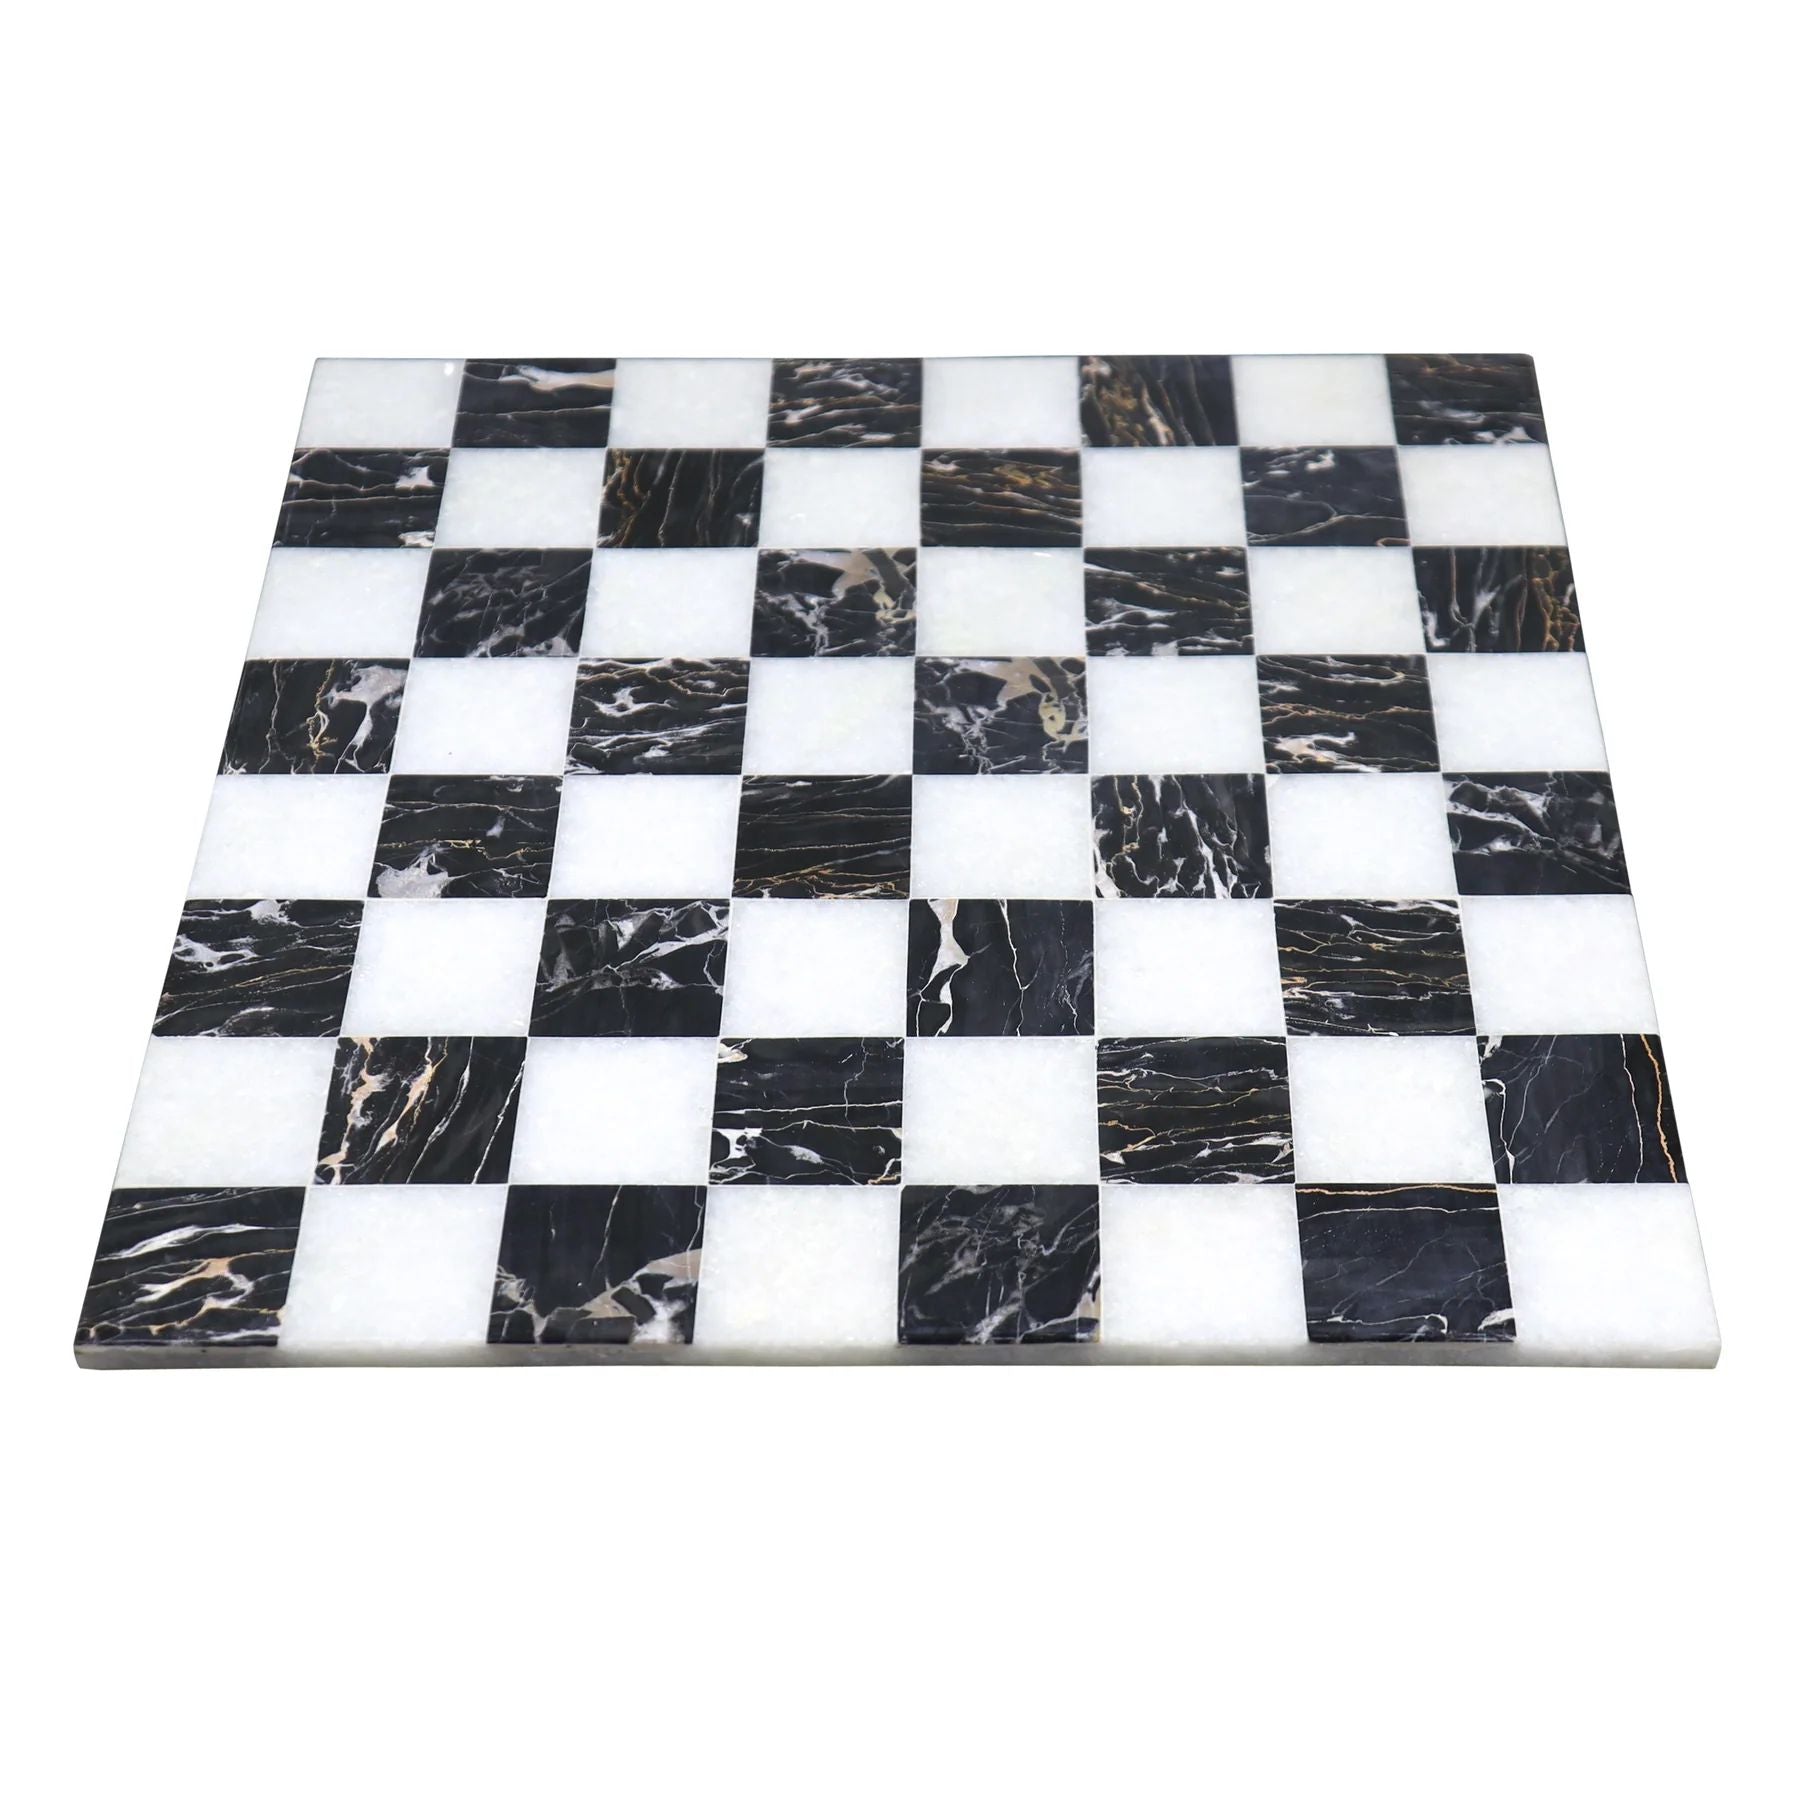 |14:200006151#Checkers   Chess